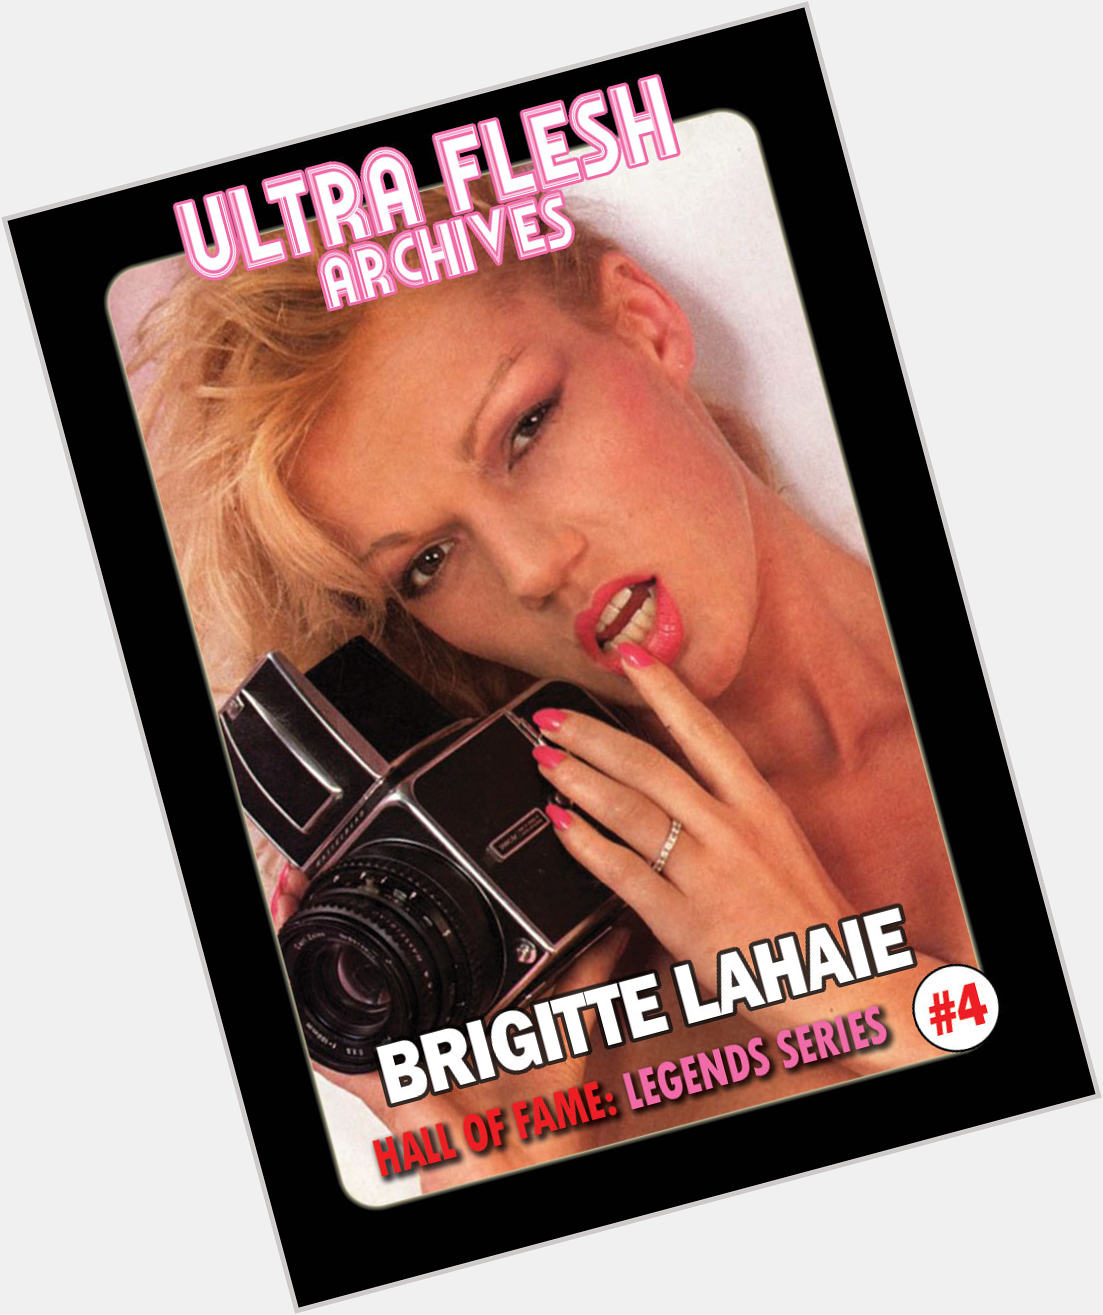 Happy birthday to Brigitte Lahaie (10/12) legendary beauty! 